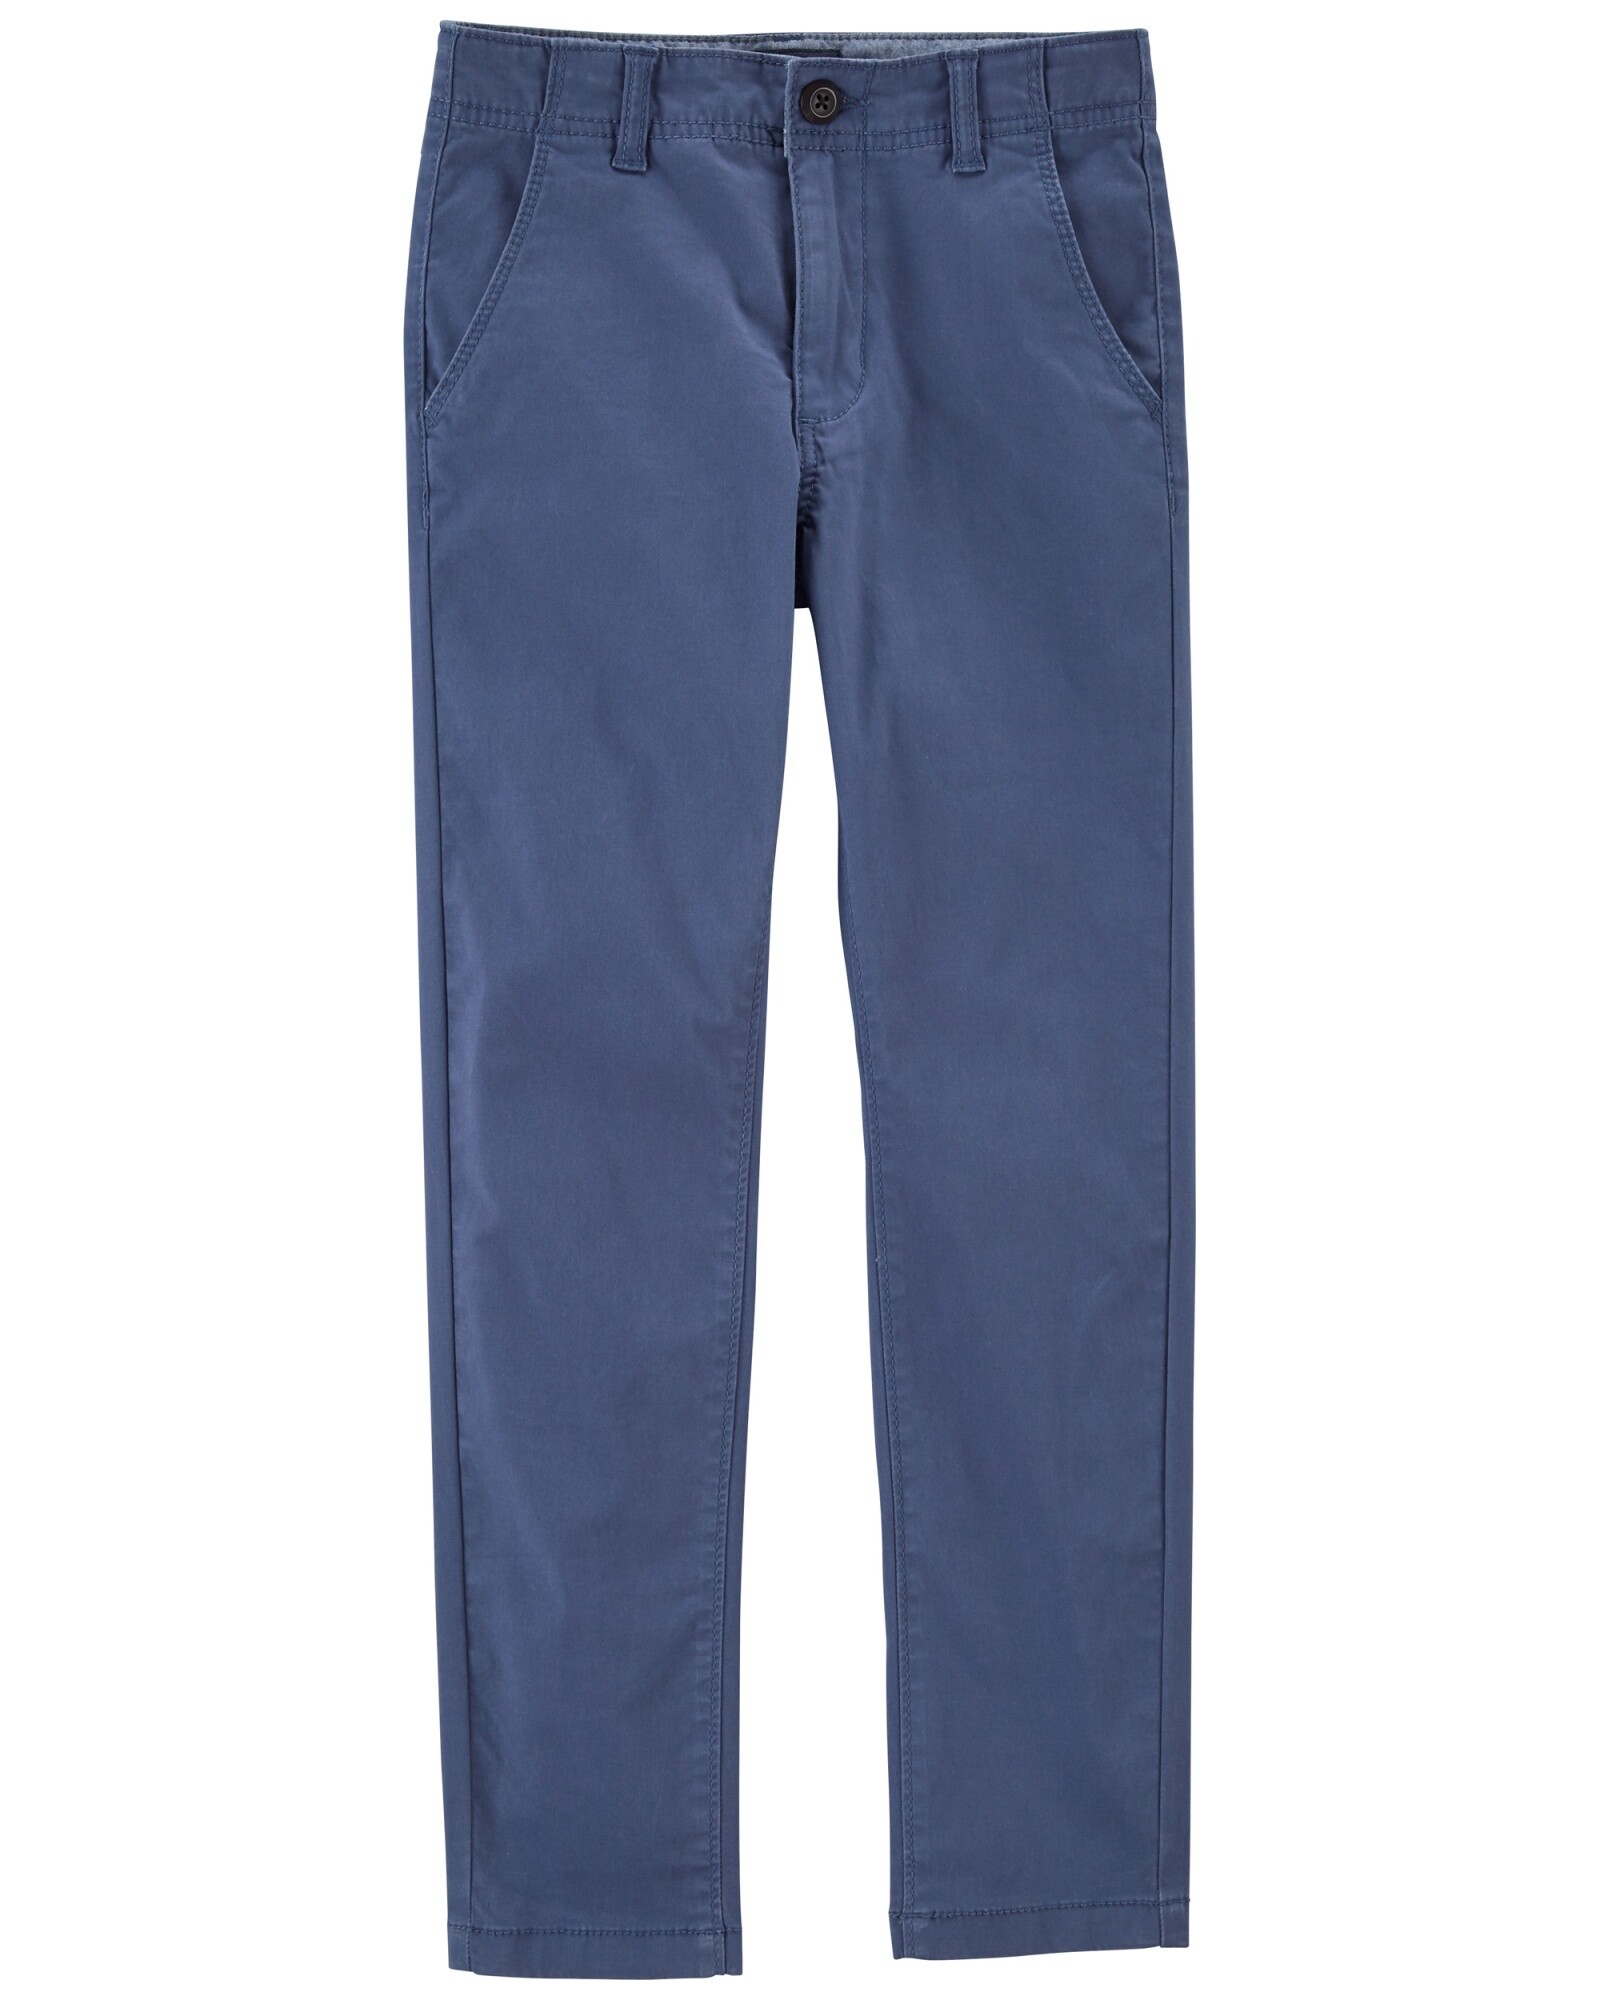 Pantalón de algodón, ajustado, azul. Talles 4-14 Sin color